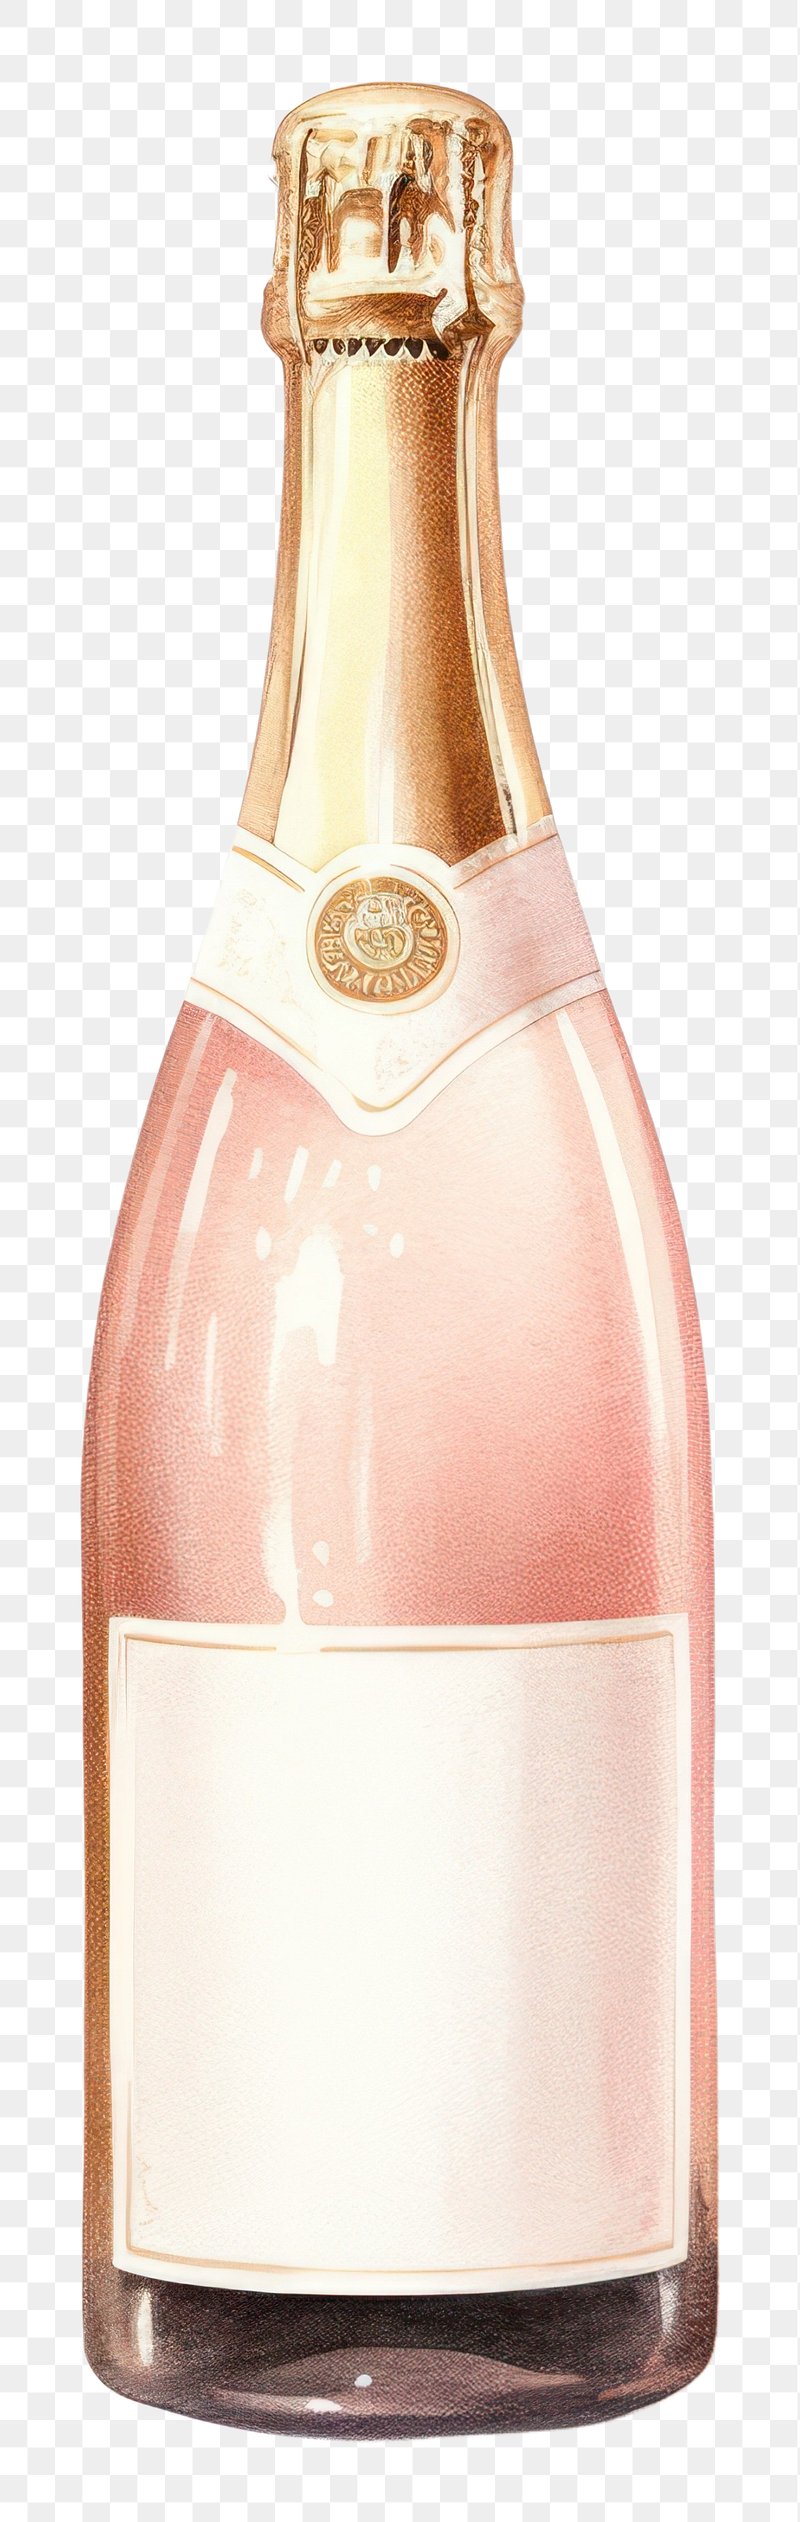 champagne bottle images